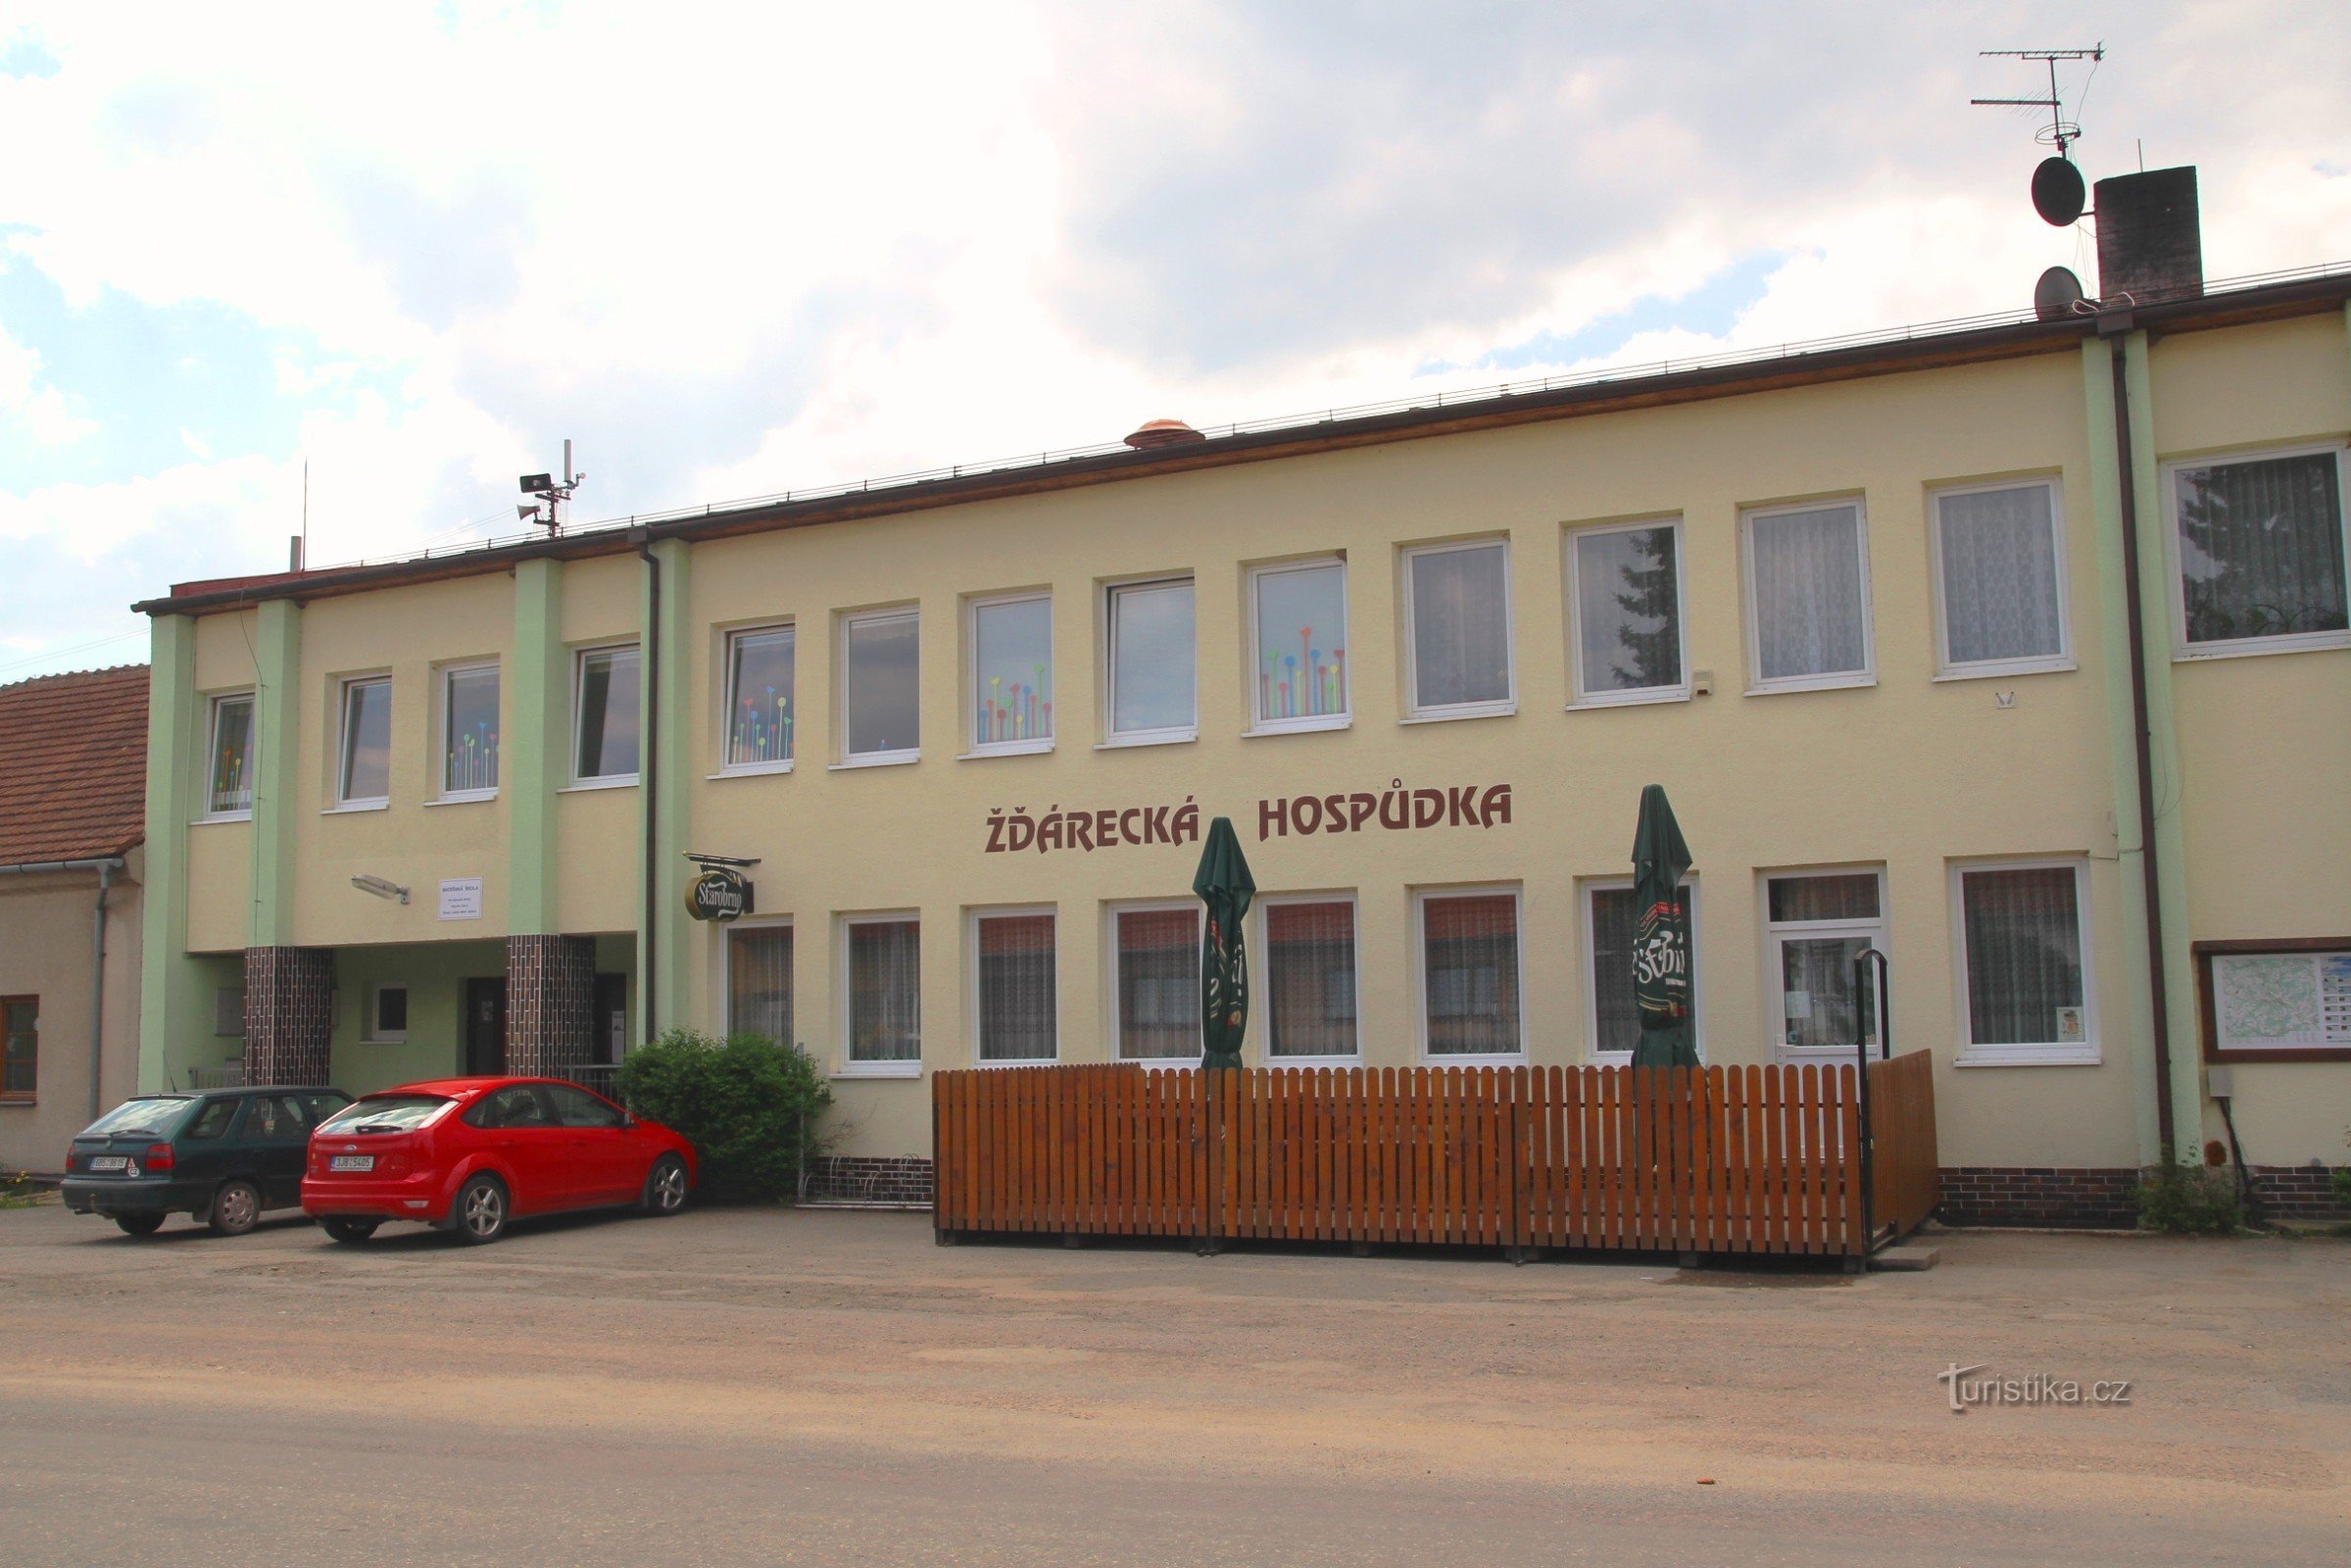 Žďárecká pub is located near the bus stop